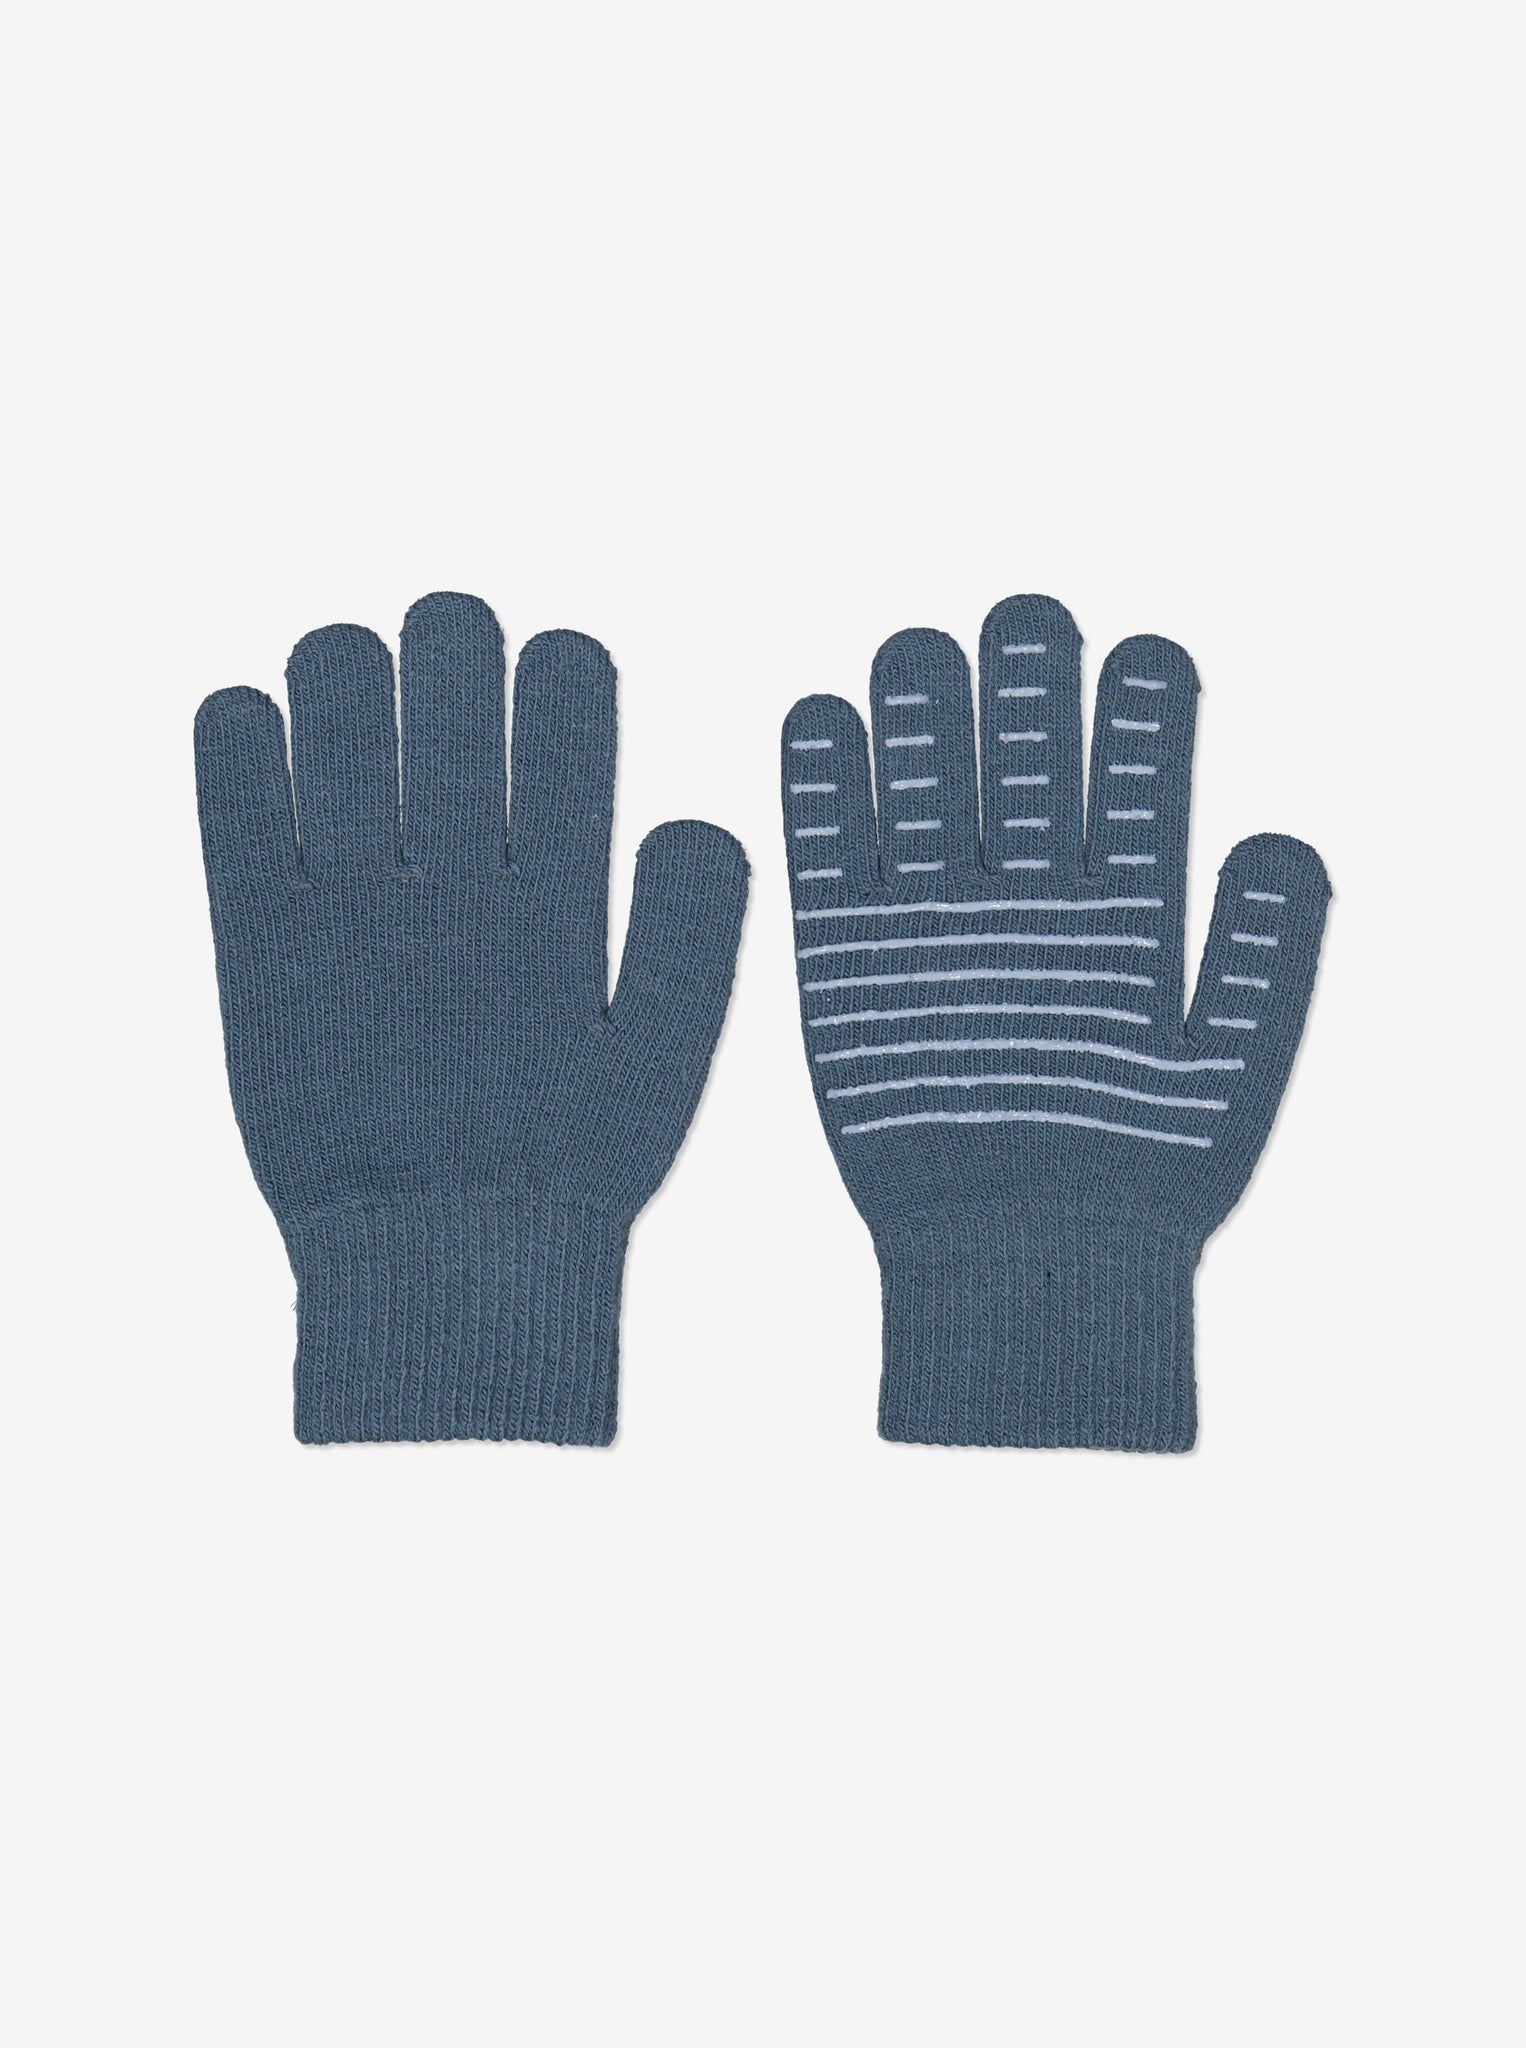 Navy Kids Magic Gloves from Polarn O. Pyret Kidswear. 